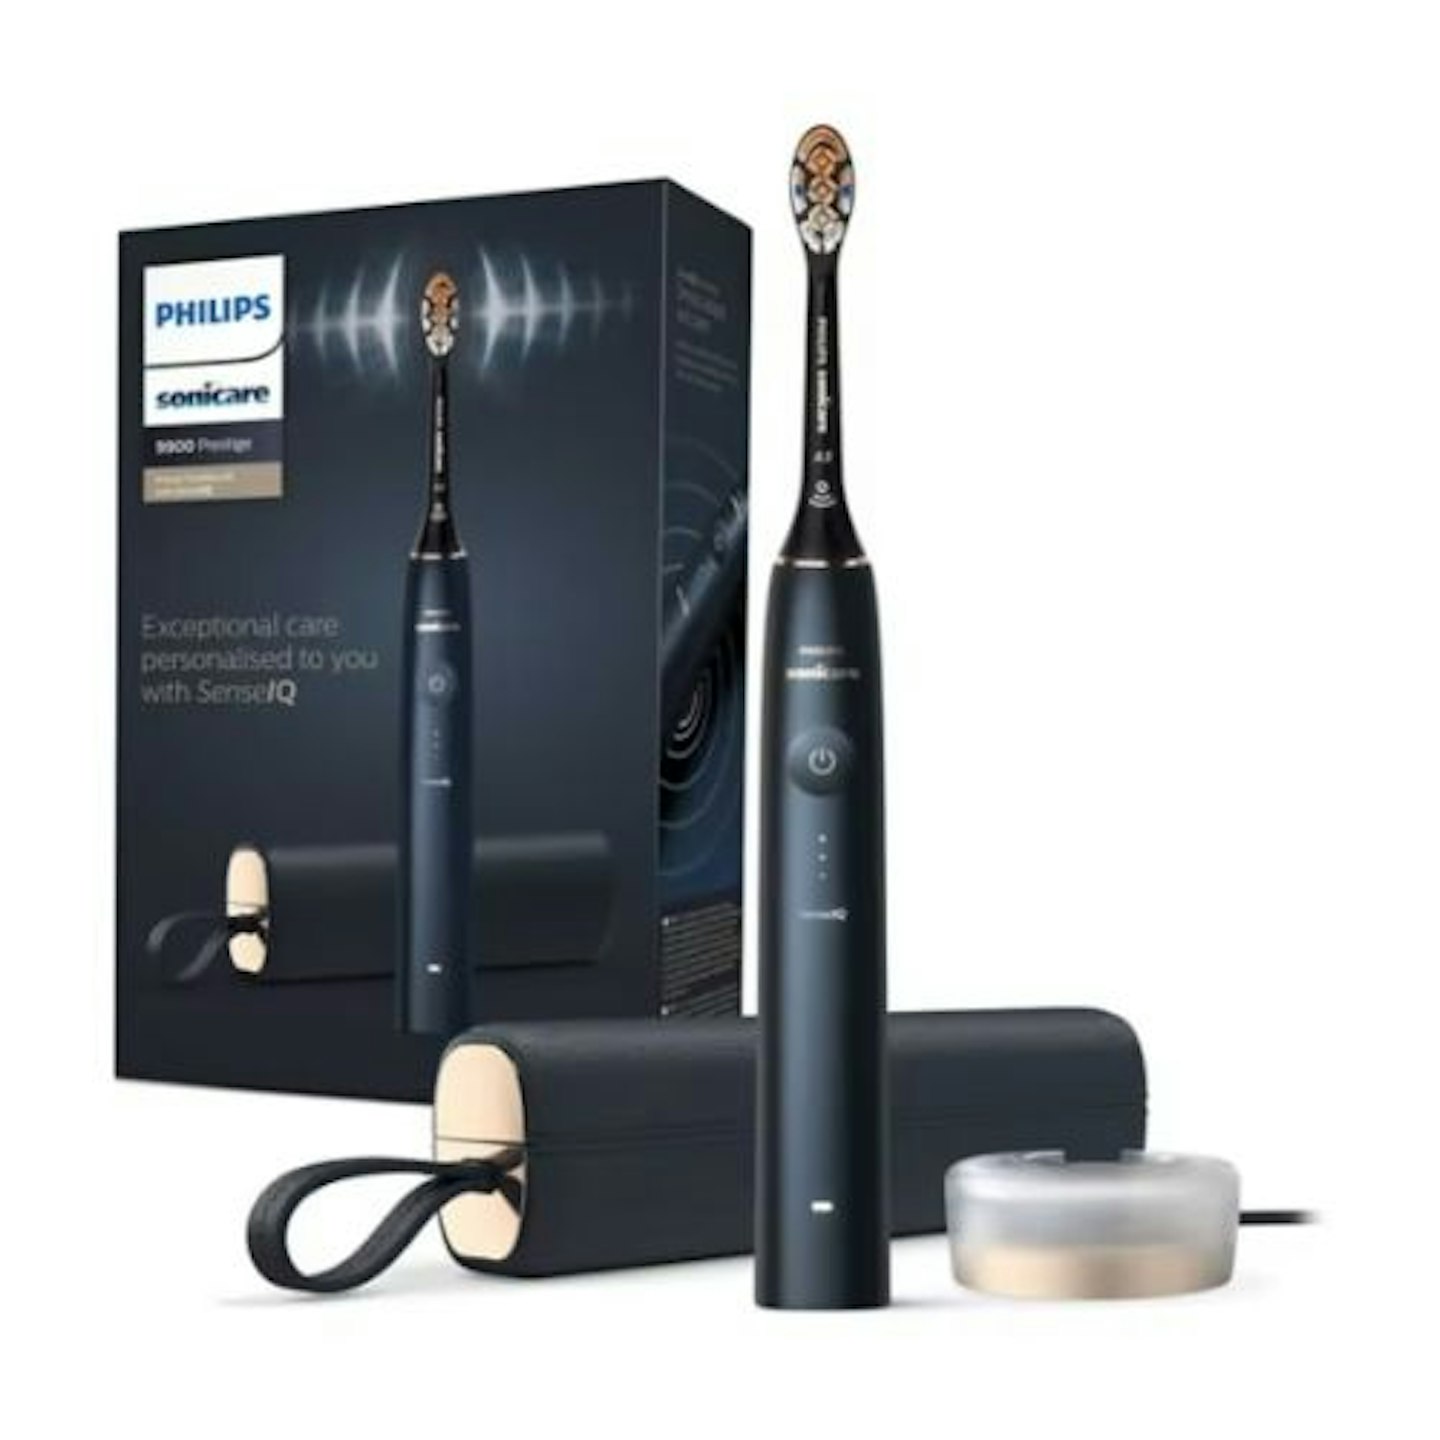 Philips Sonicare 9900 Prestige Power Toothbrush with SensieIQ